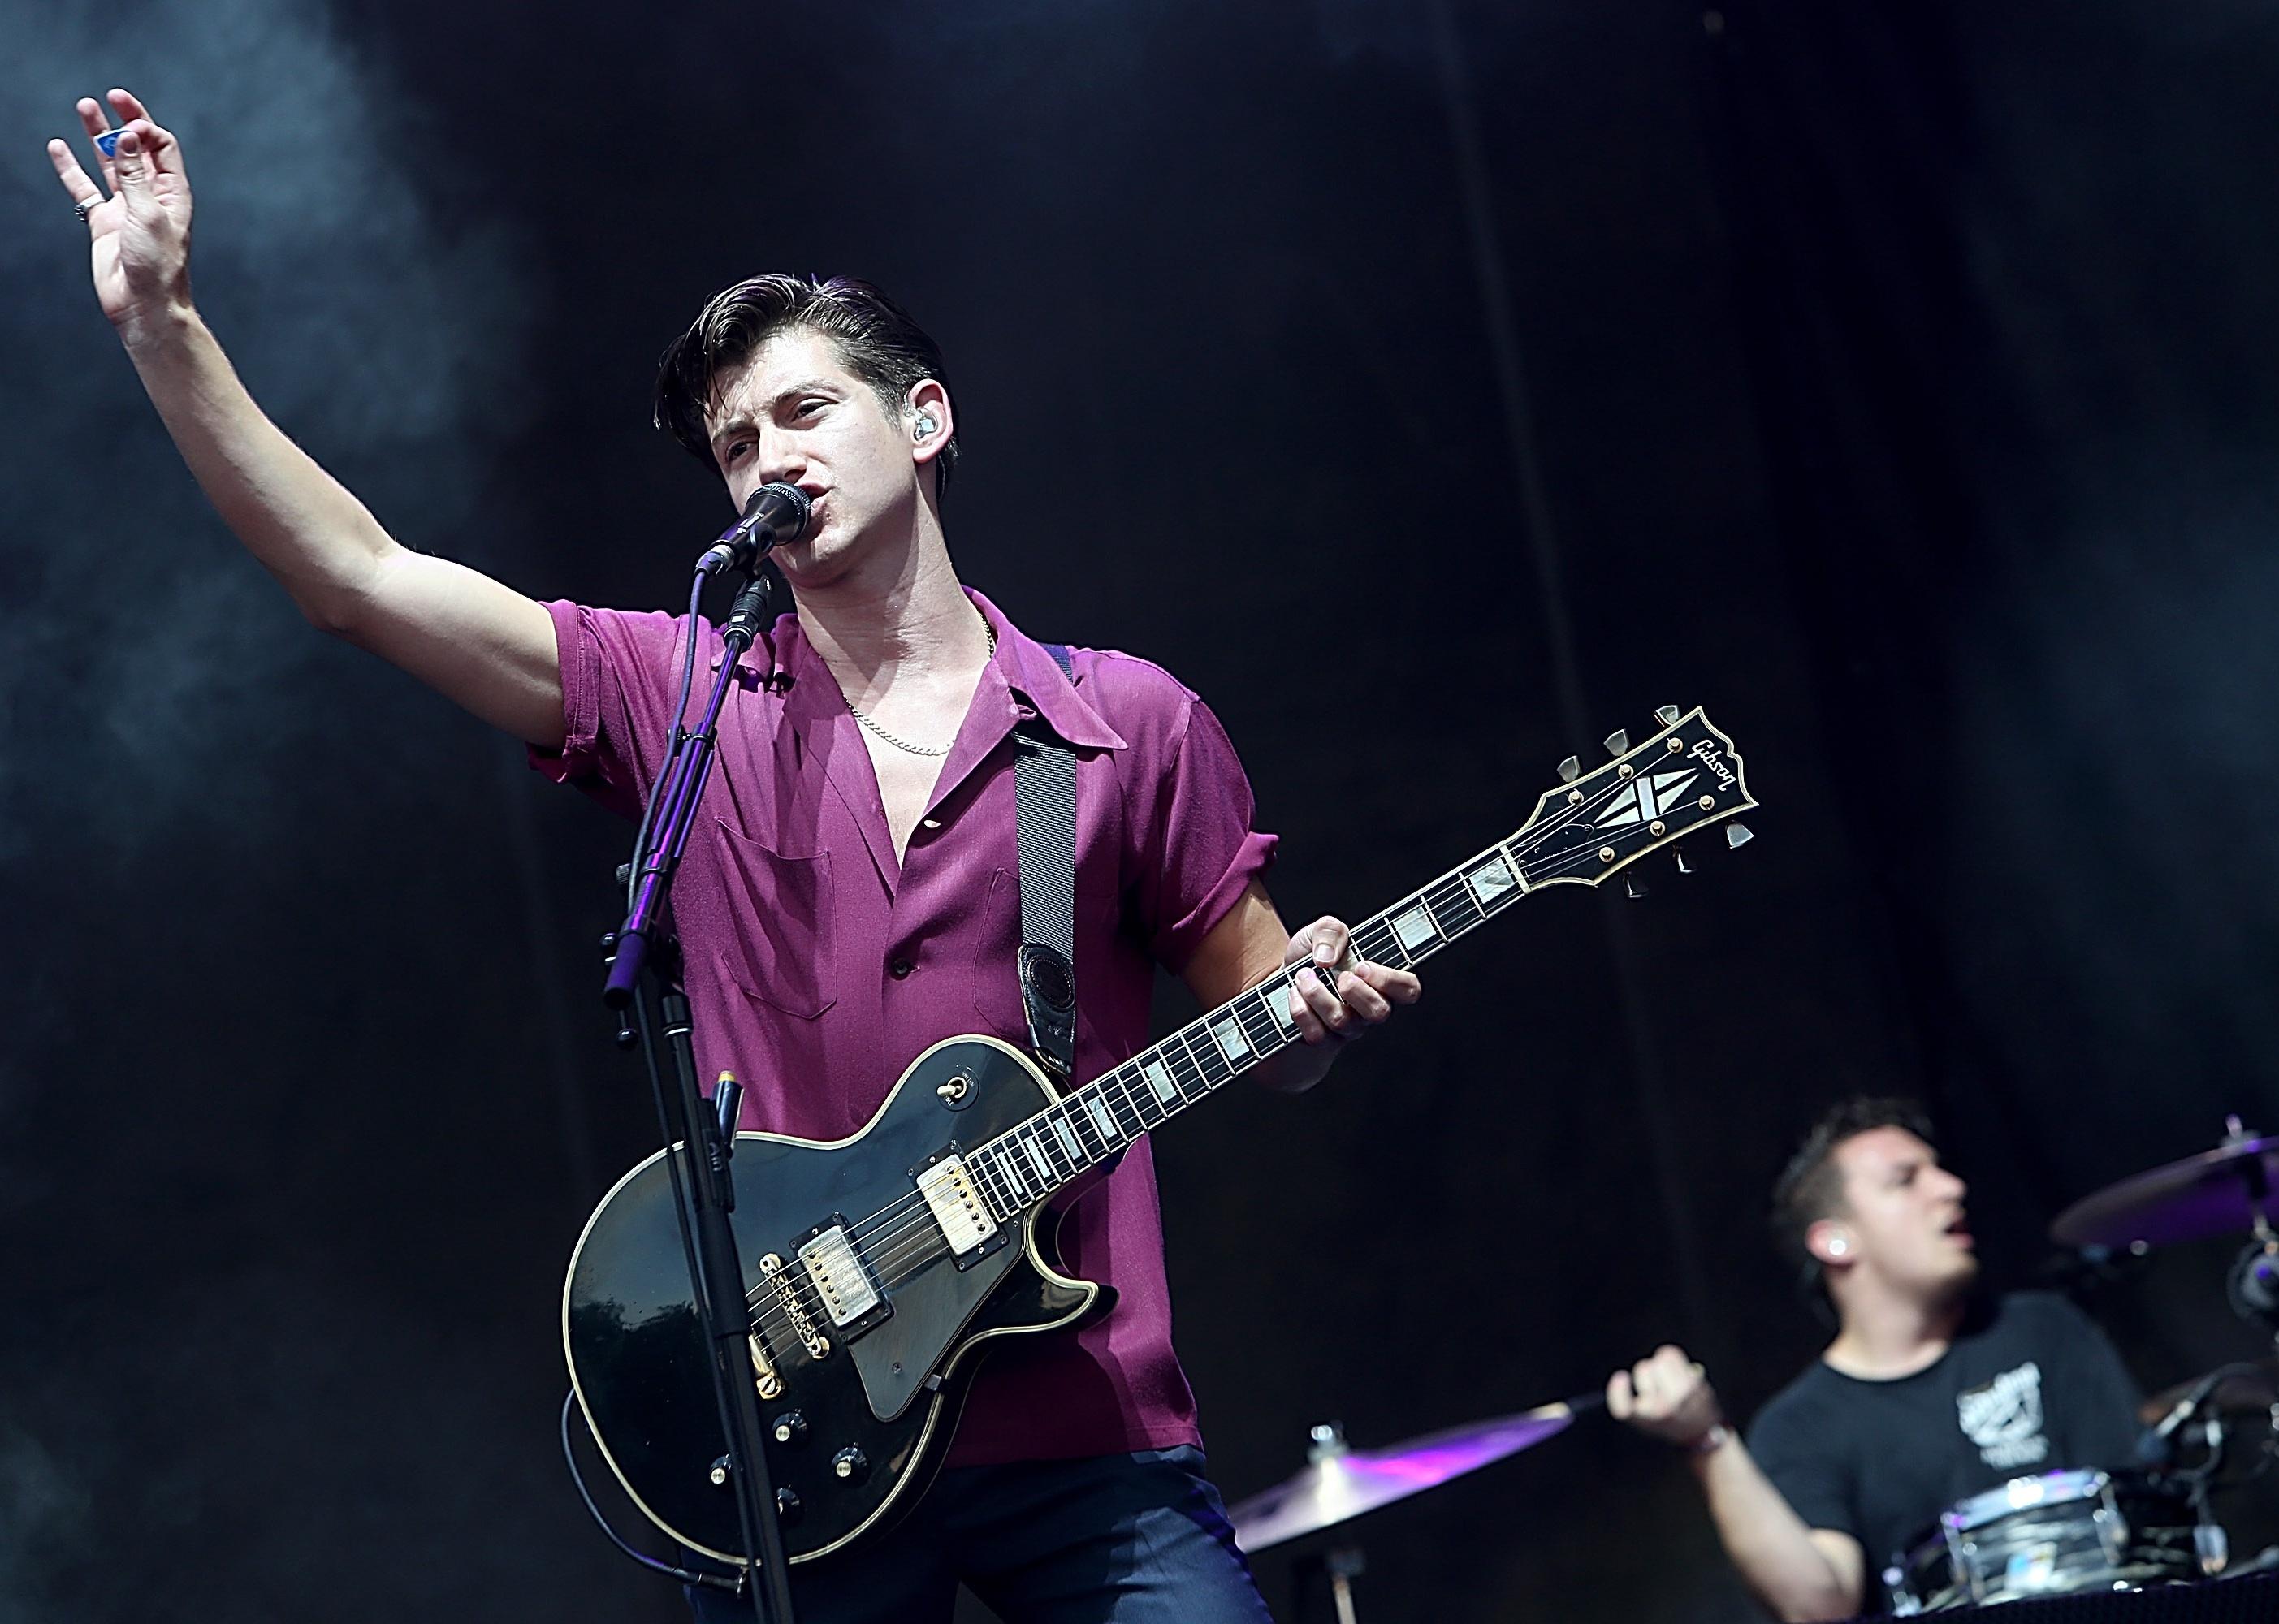 Alex Turner of Arctic Monkeys sings a song